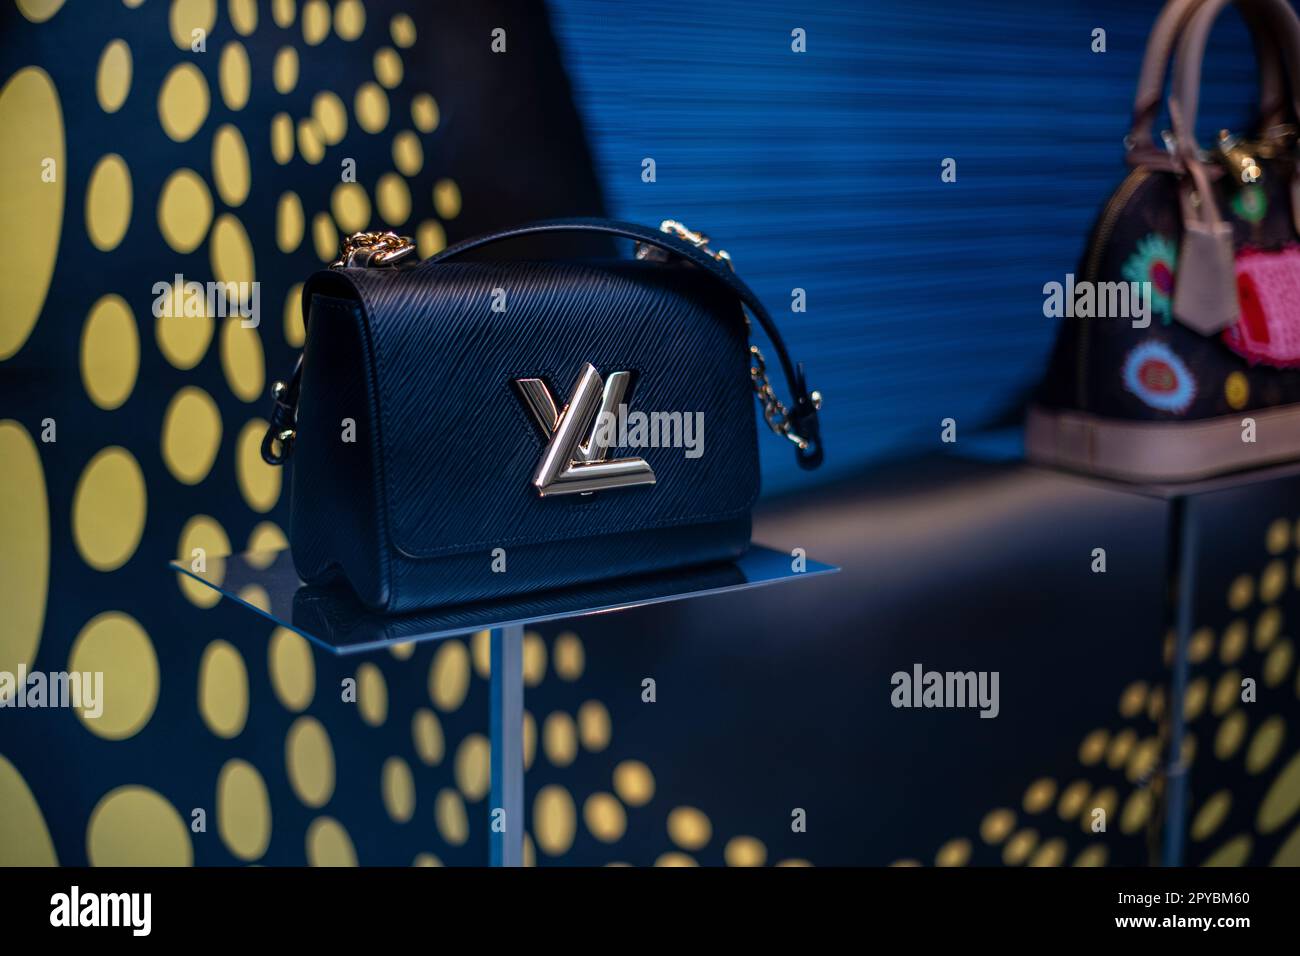 Handbags Showcased Fashion Store Louis Vuitton Fuzhou City Southeast China's  – Stock Editorial Photo © ChinaImages #236194218